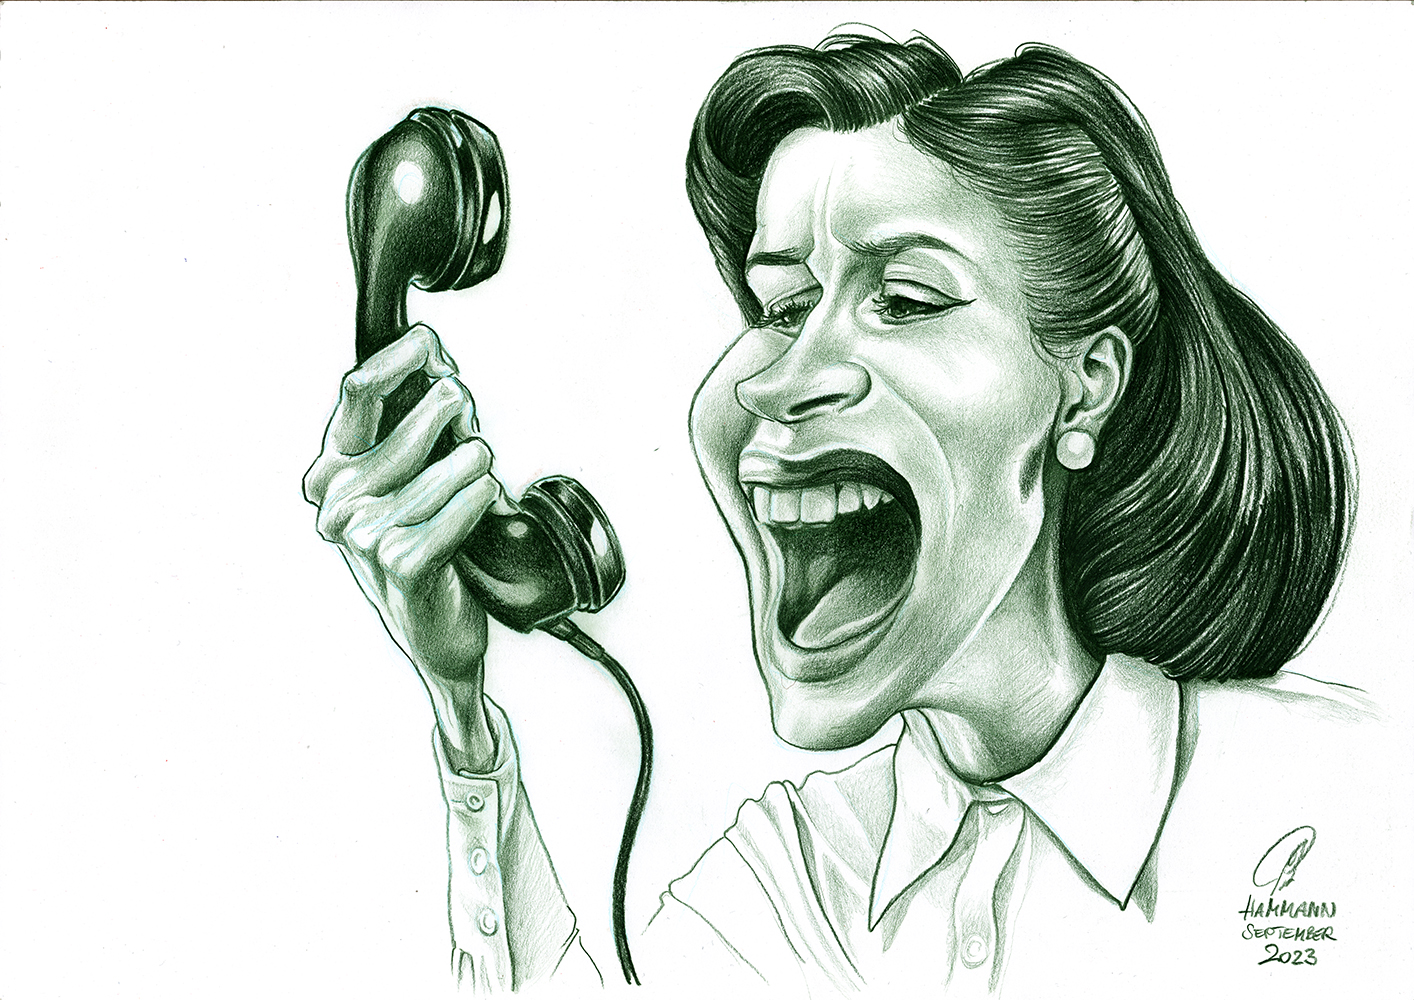 Buntstift-Zeichnung Telefondame/ballpen drawing telephone lady